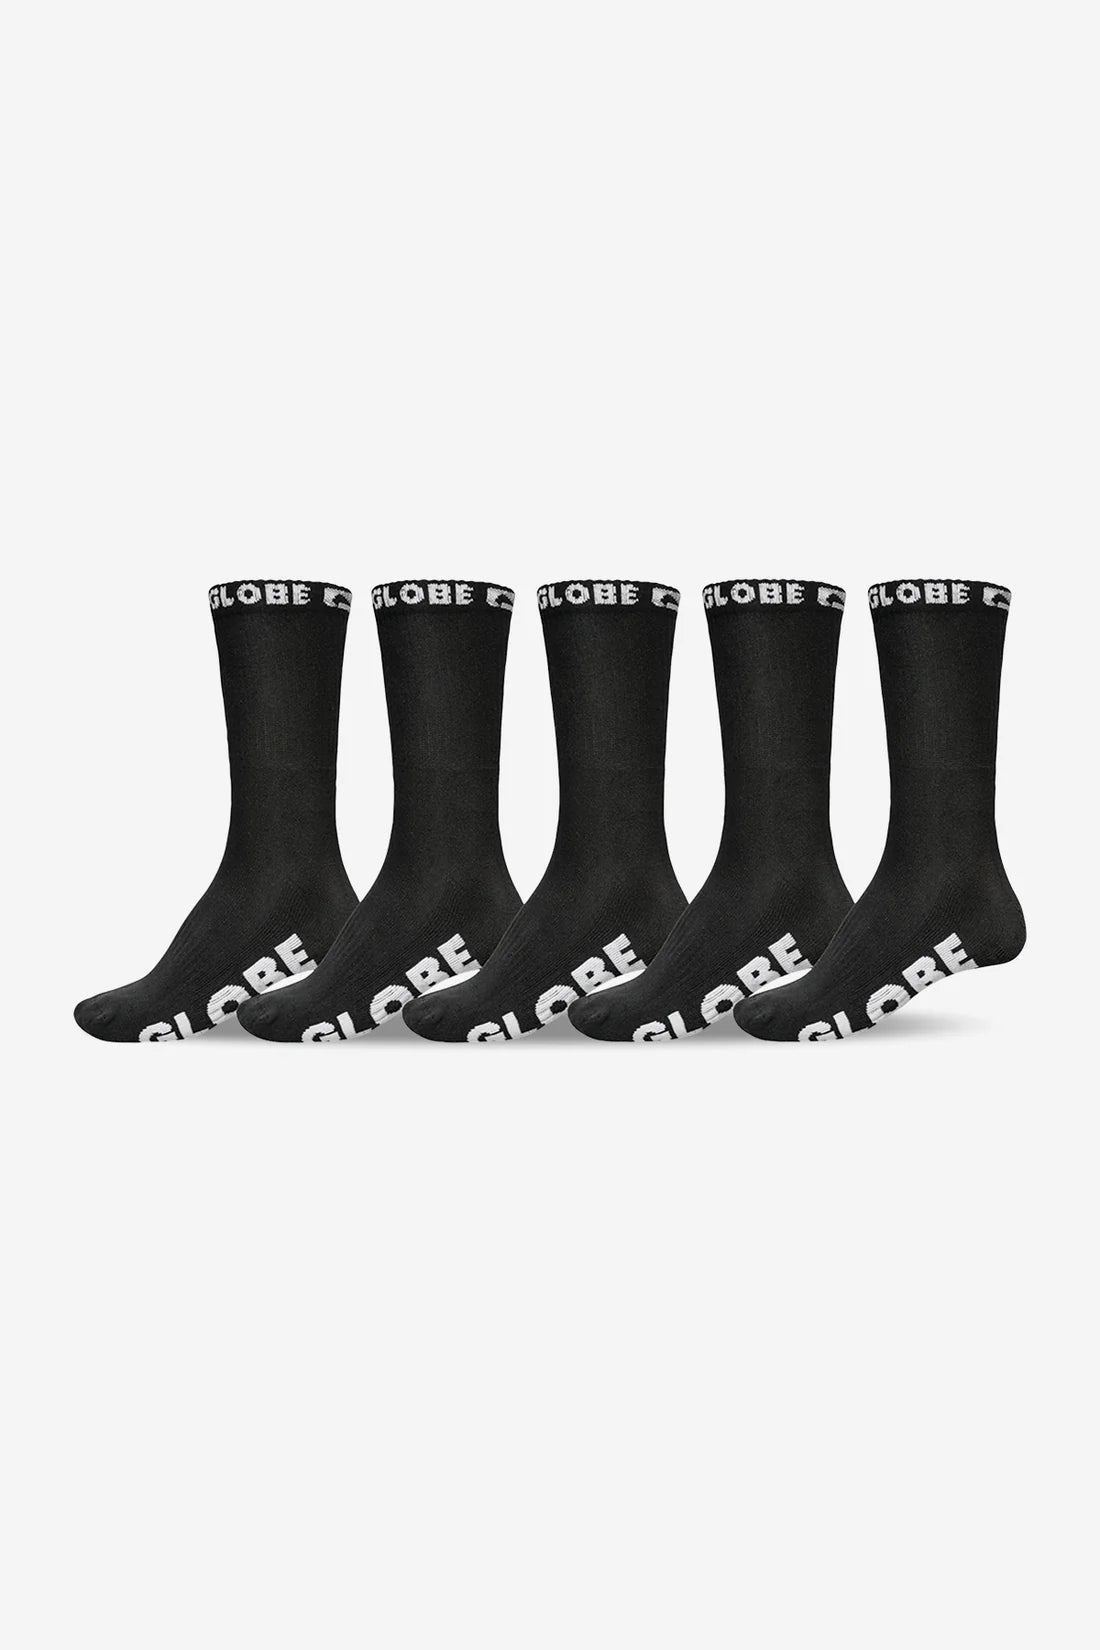 GLOBE Blackout 5pk Socks - Black/Black